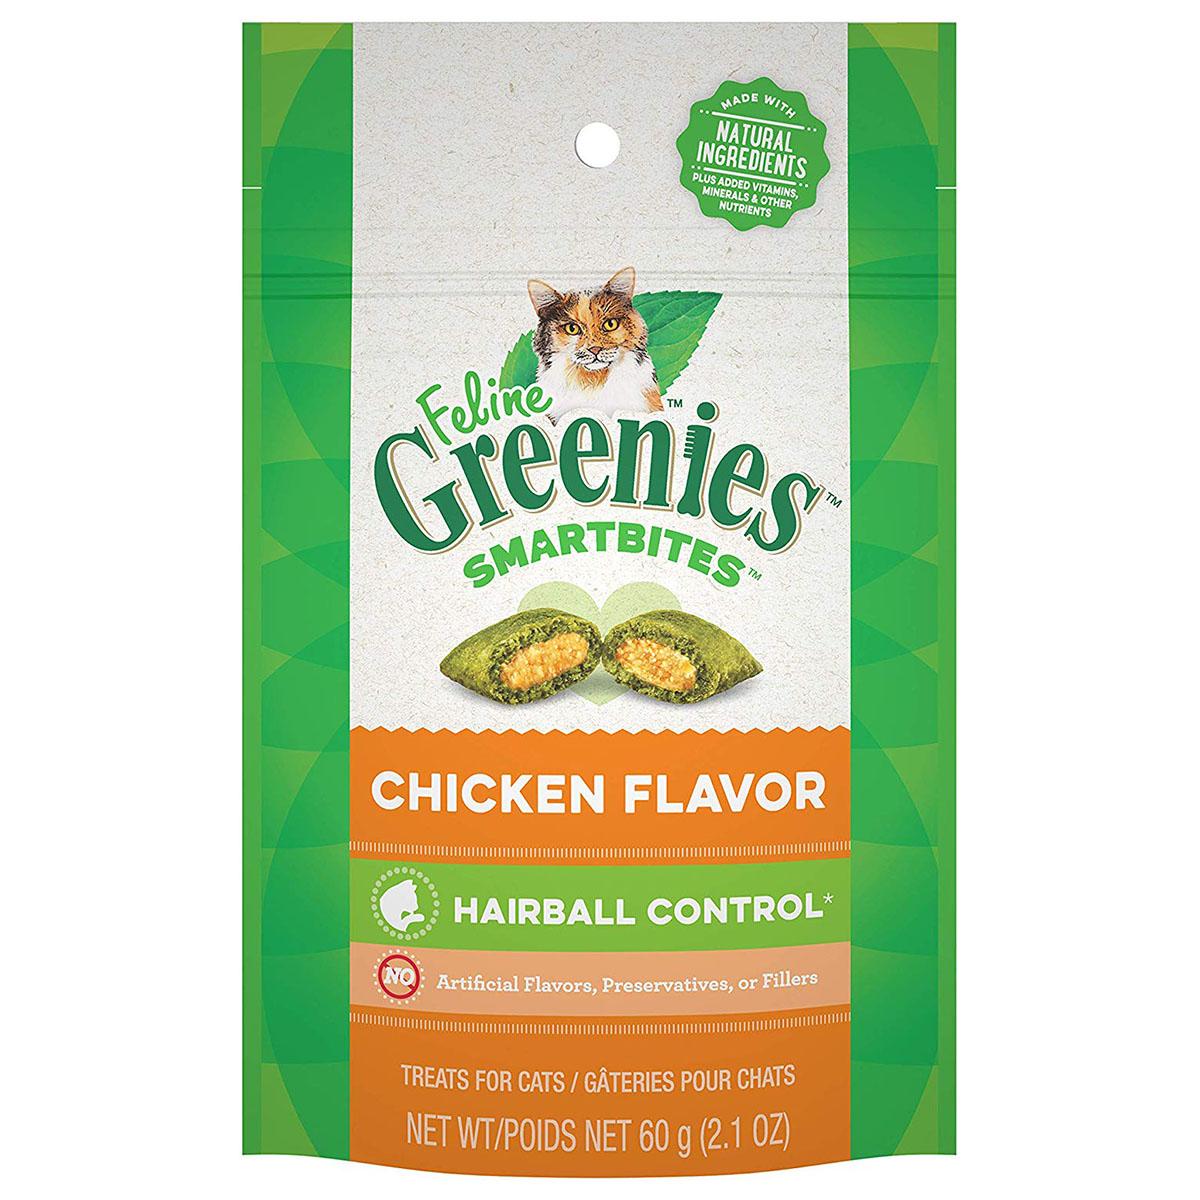 Greenies Smartbites Hairball Control Cat Treats - Chicken